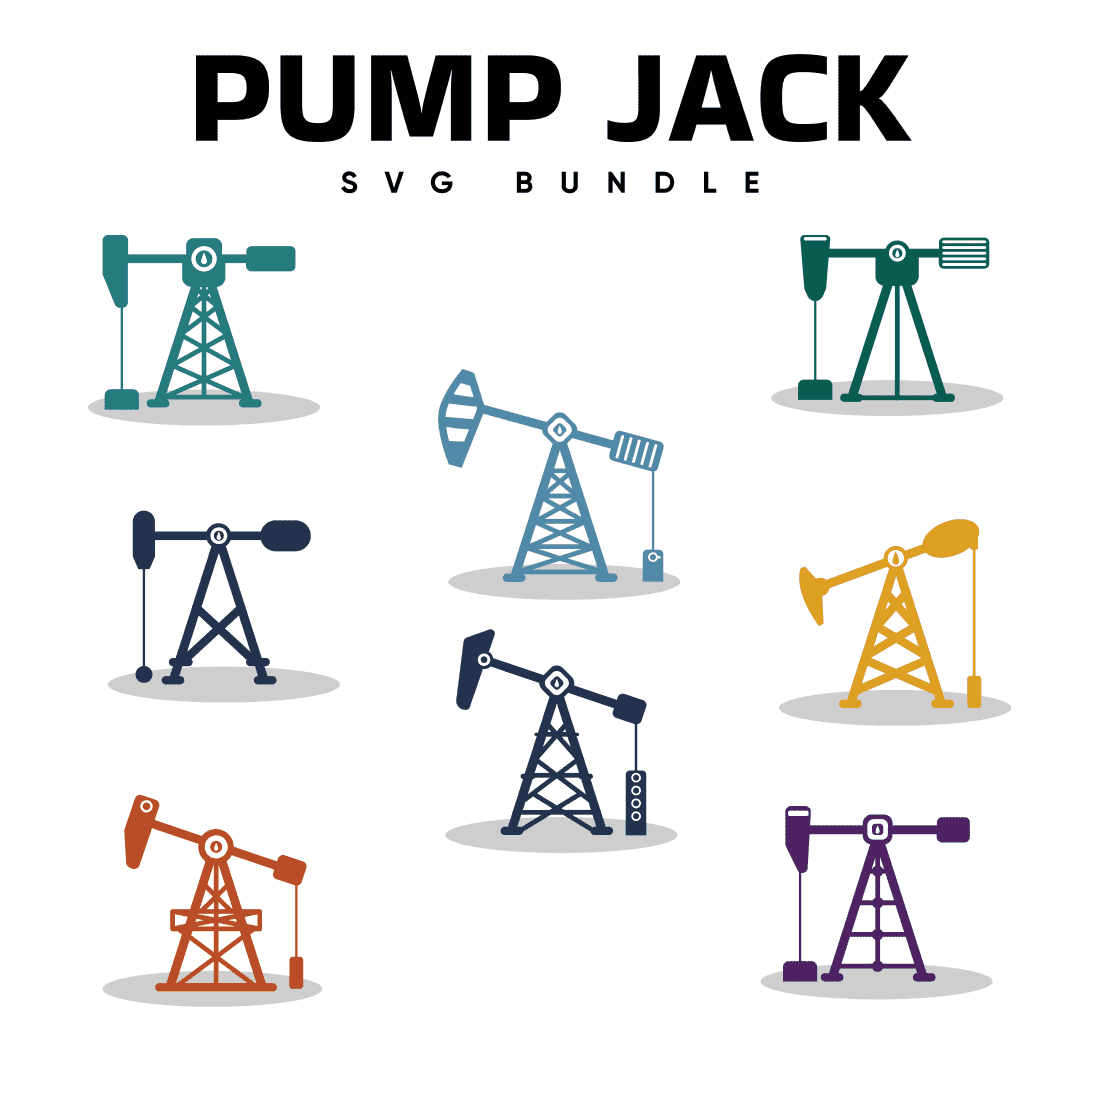 Pump jack svg bundle.